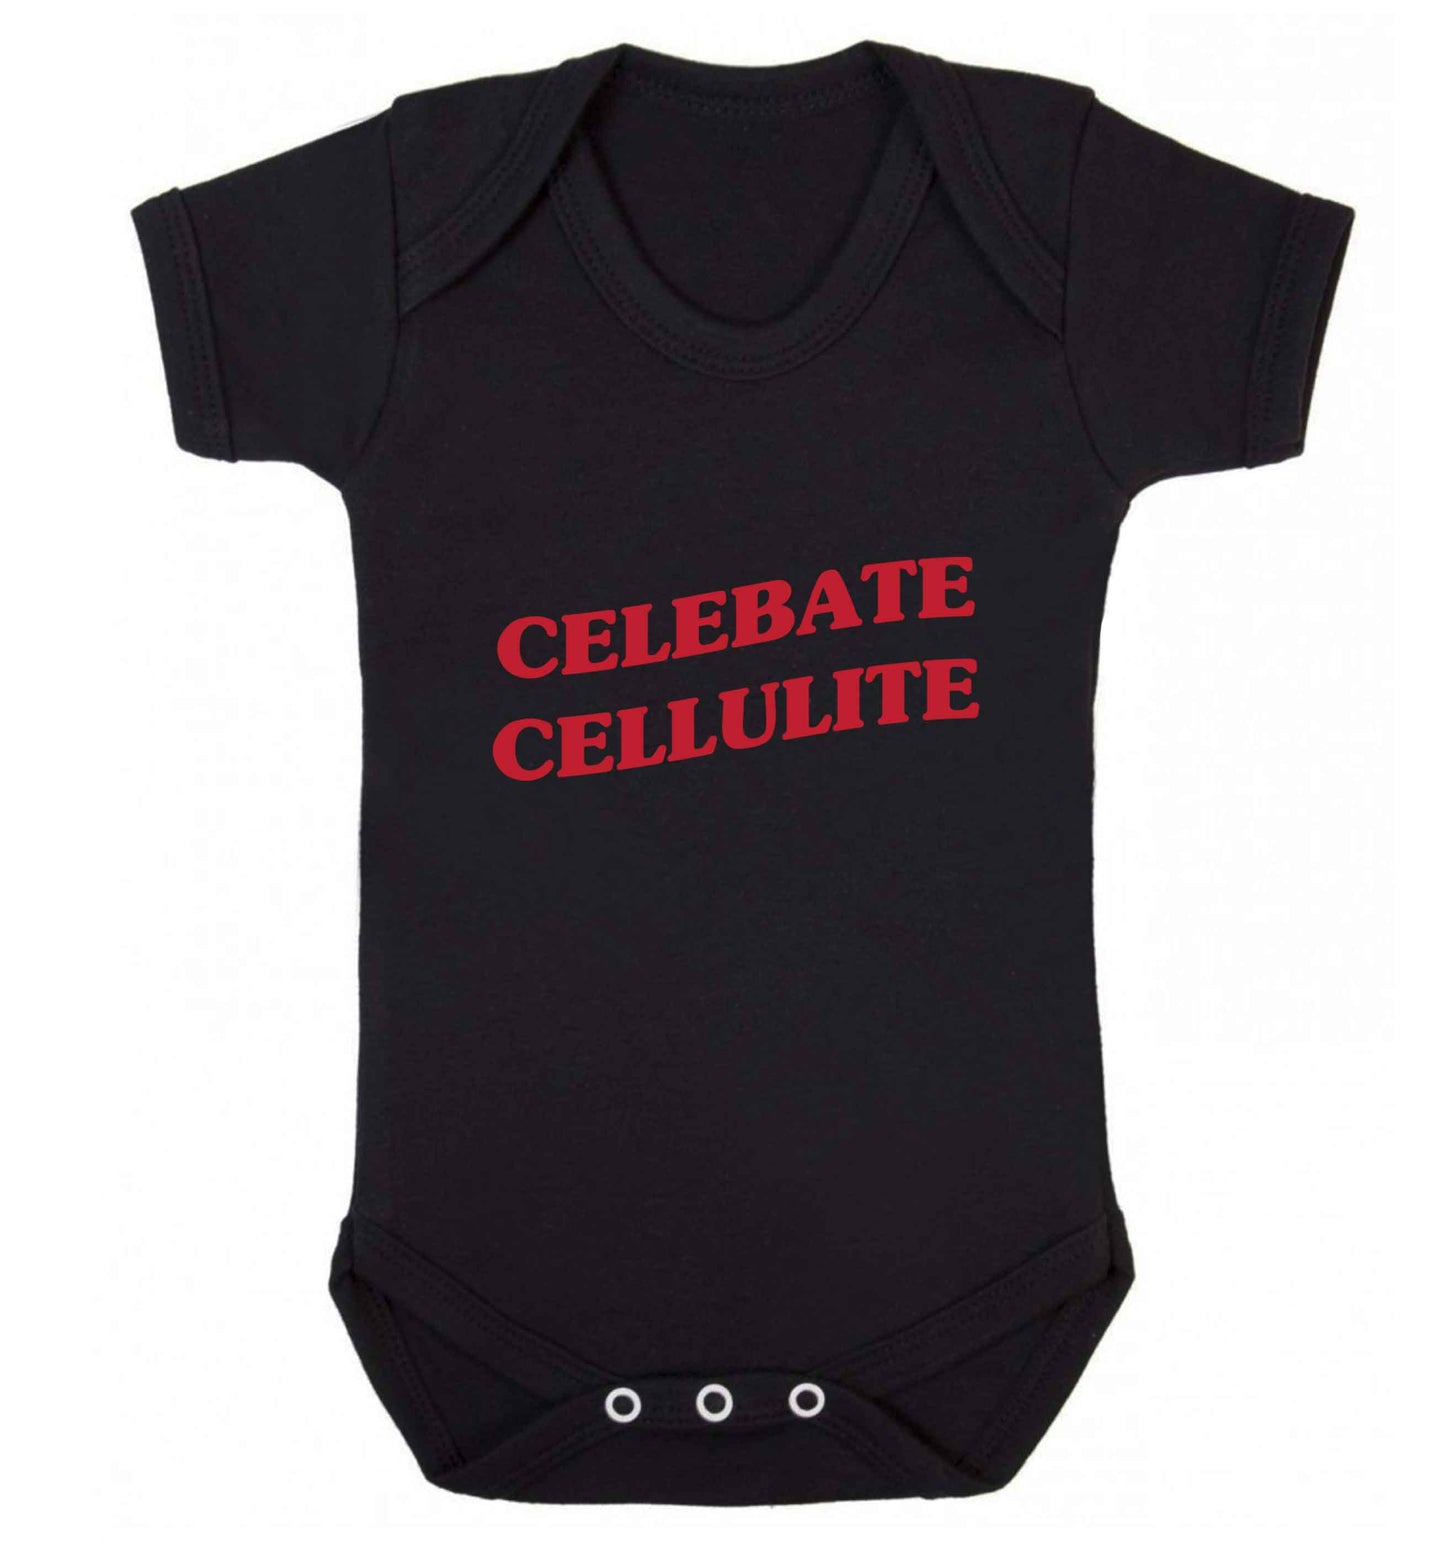 Celebrate cellulite baby vest black 18-24 months